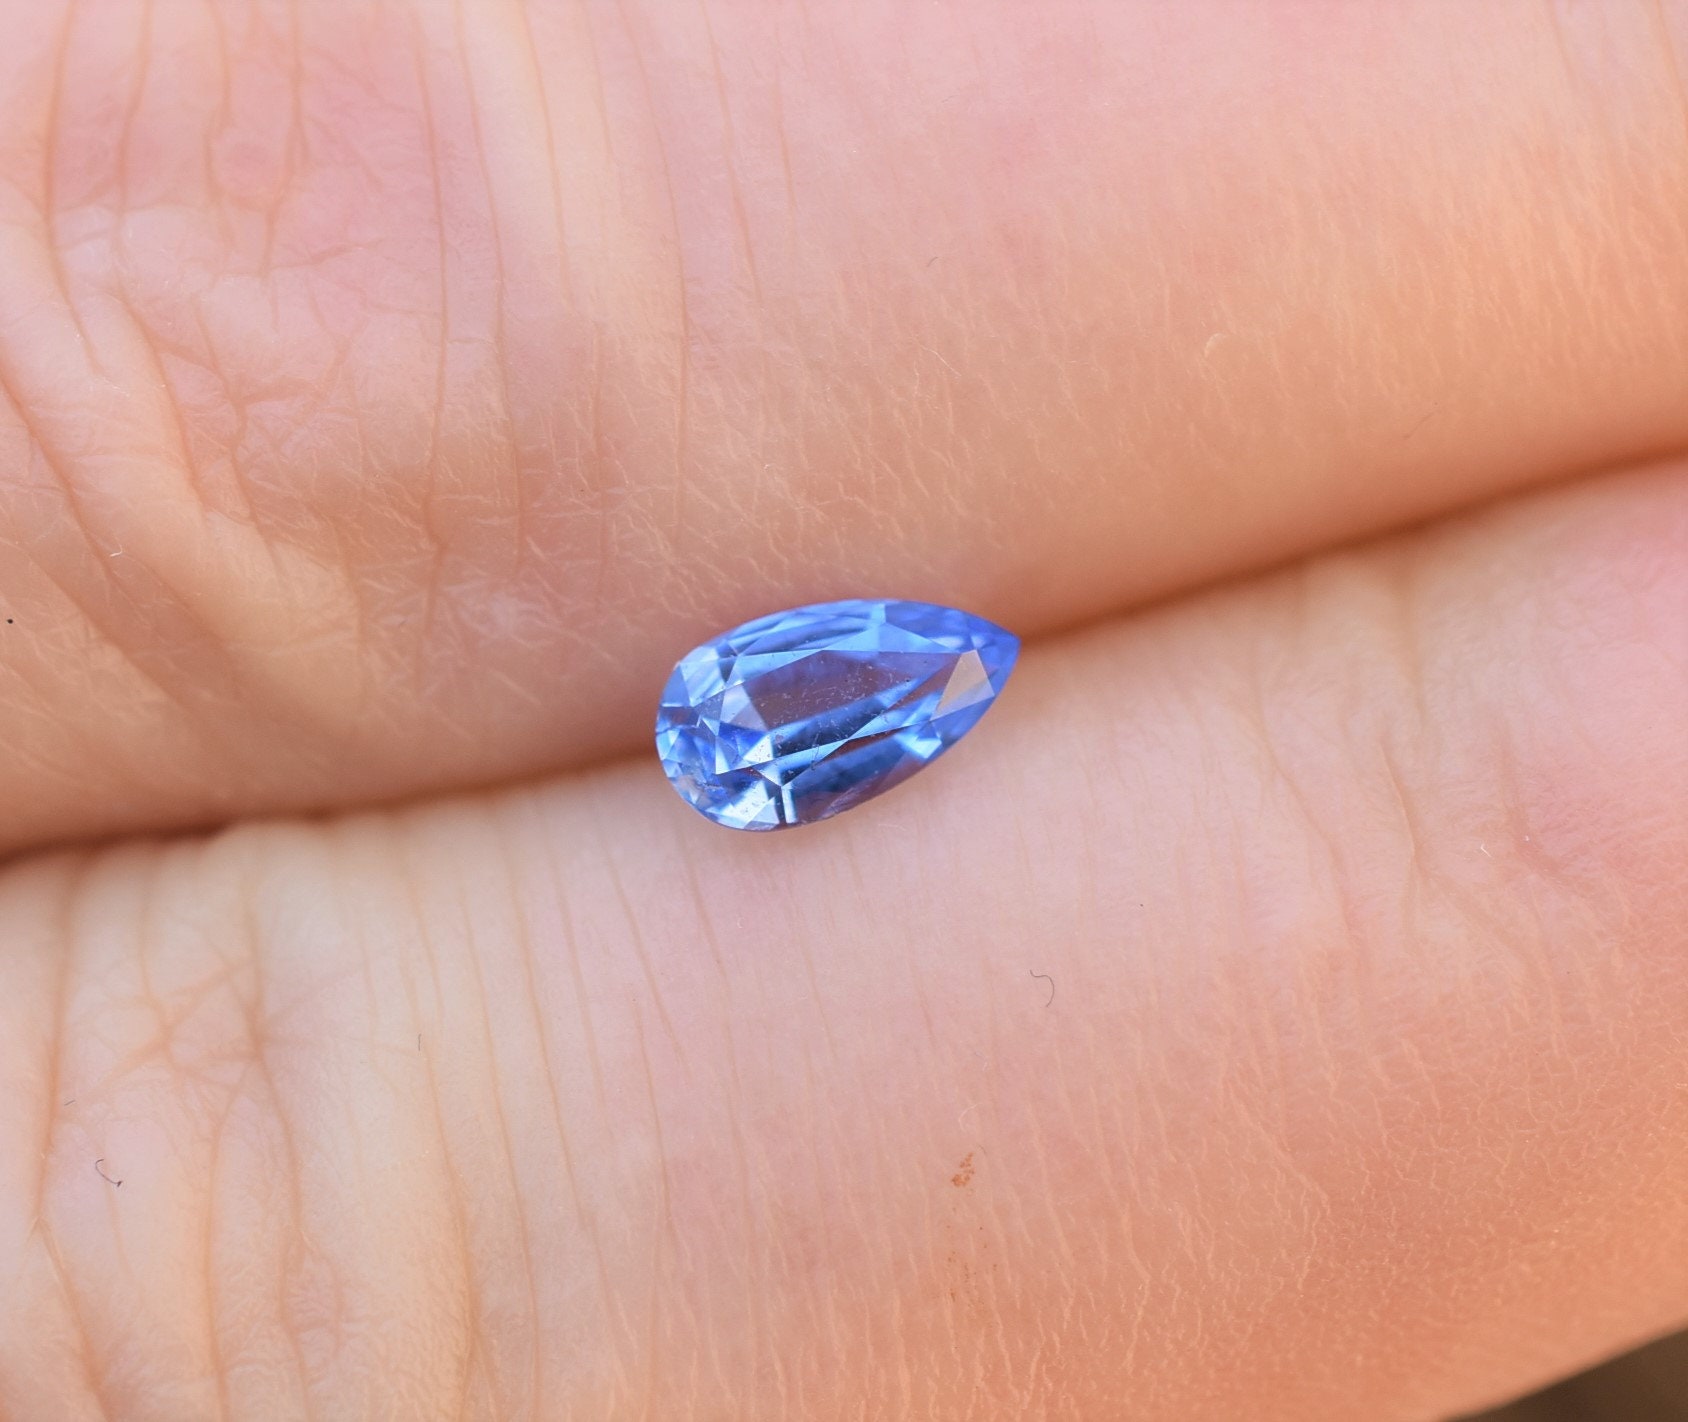 .85 Lustrous Cobalt-Blue Spinel (Cobaltoan) Crystal Cluster - Vietnam